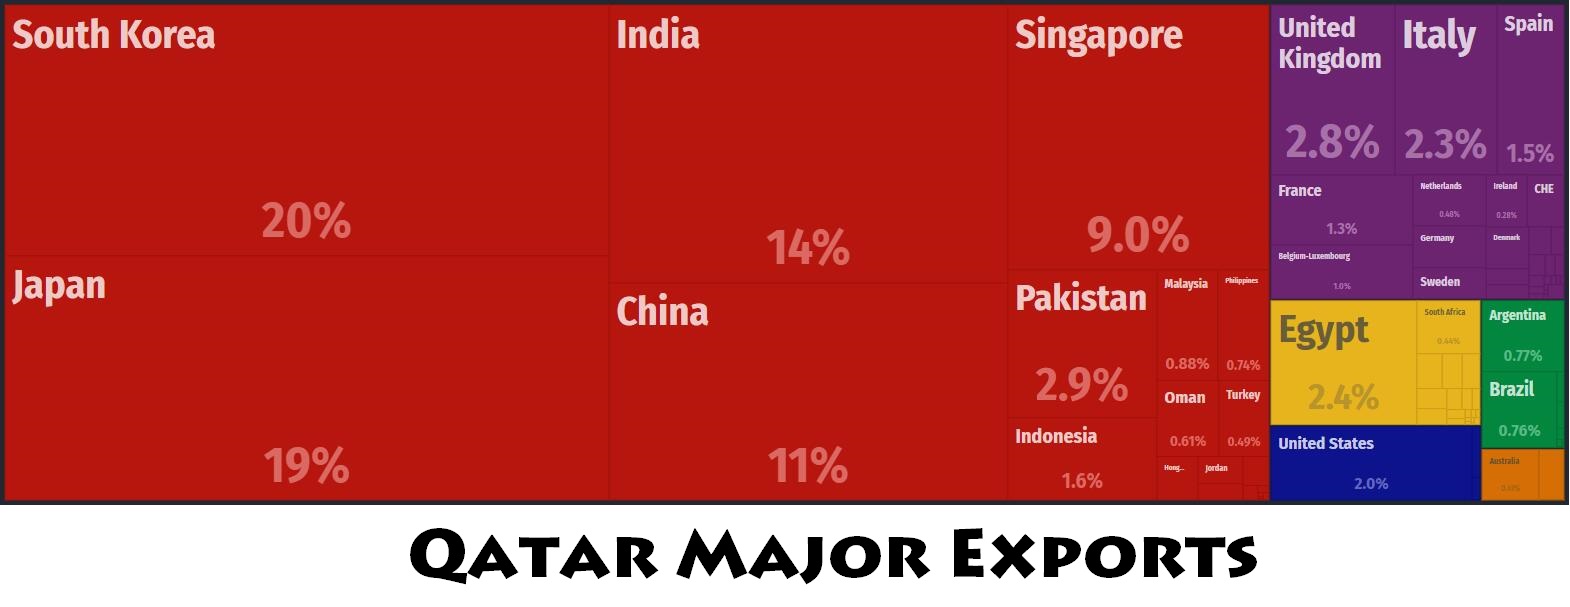 Qatar Major Trade Partners